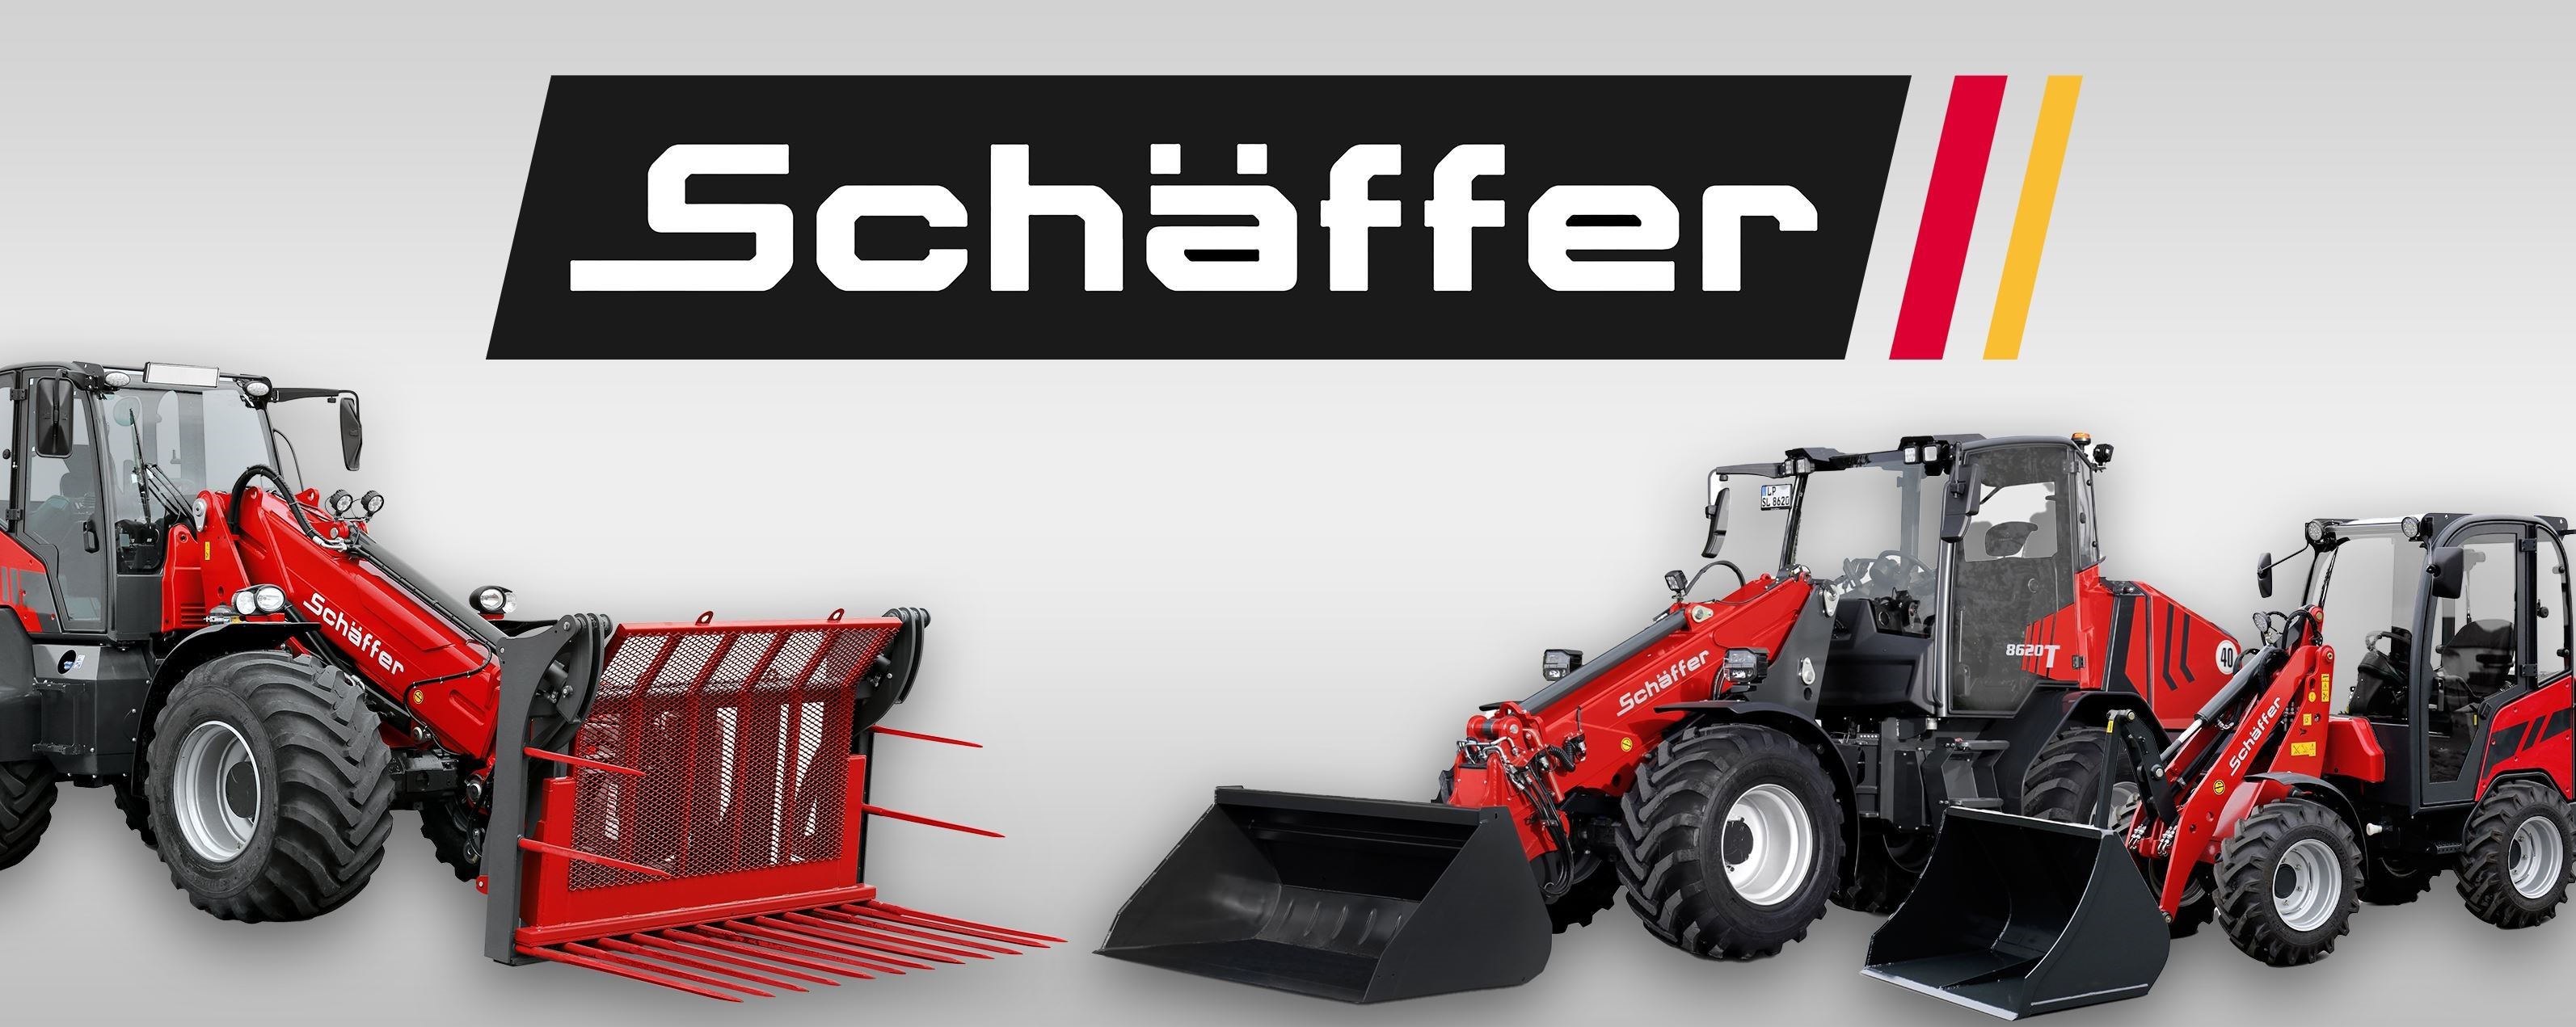 Schäffer Machinery Coming Soon!